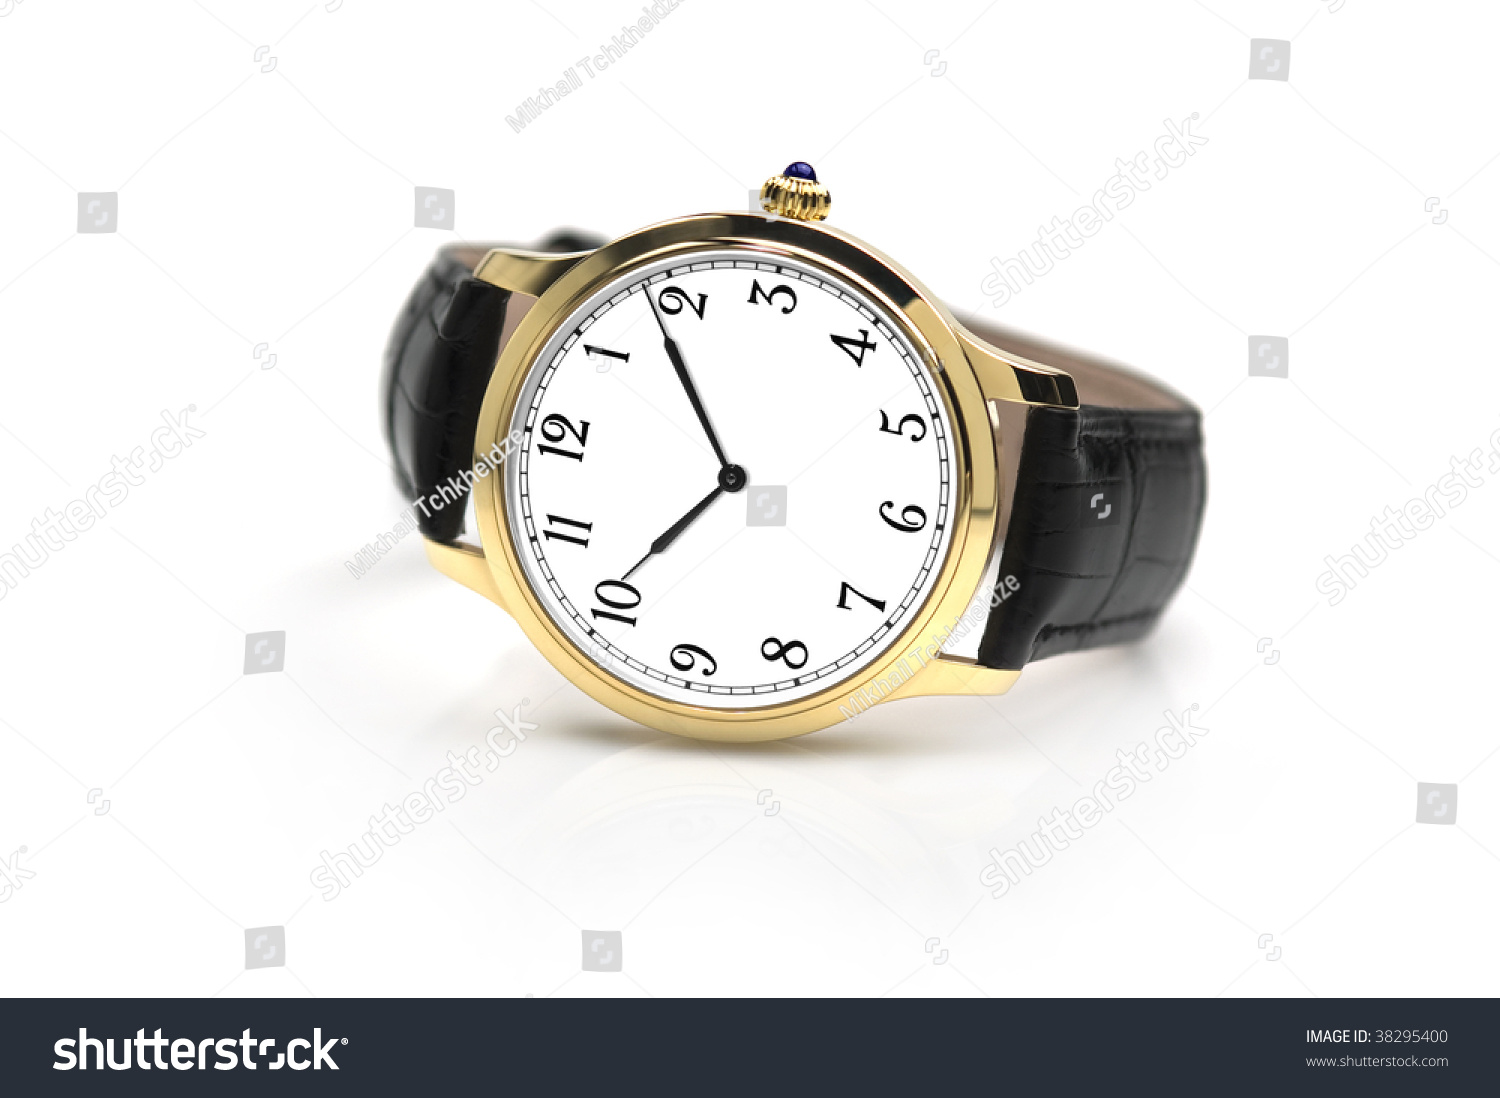 Luxury Wrist Watch On White Background Stock Photo 38295400 : Shutterstock